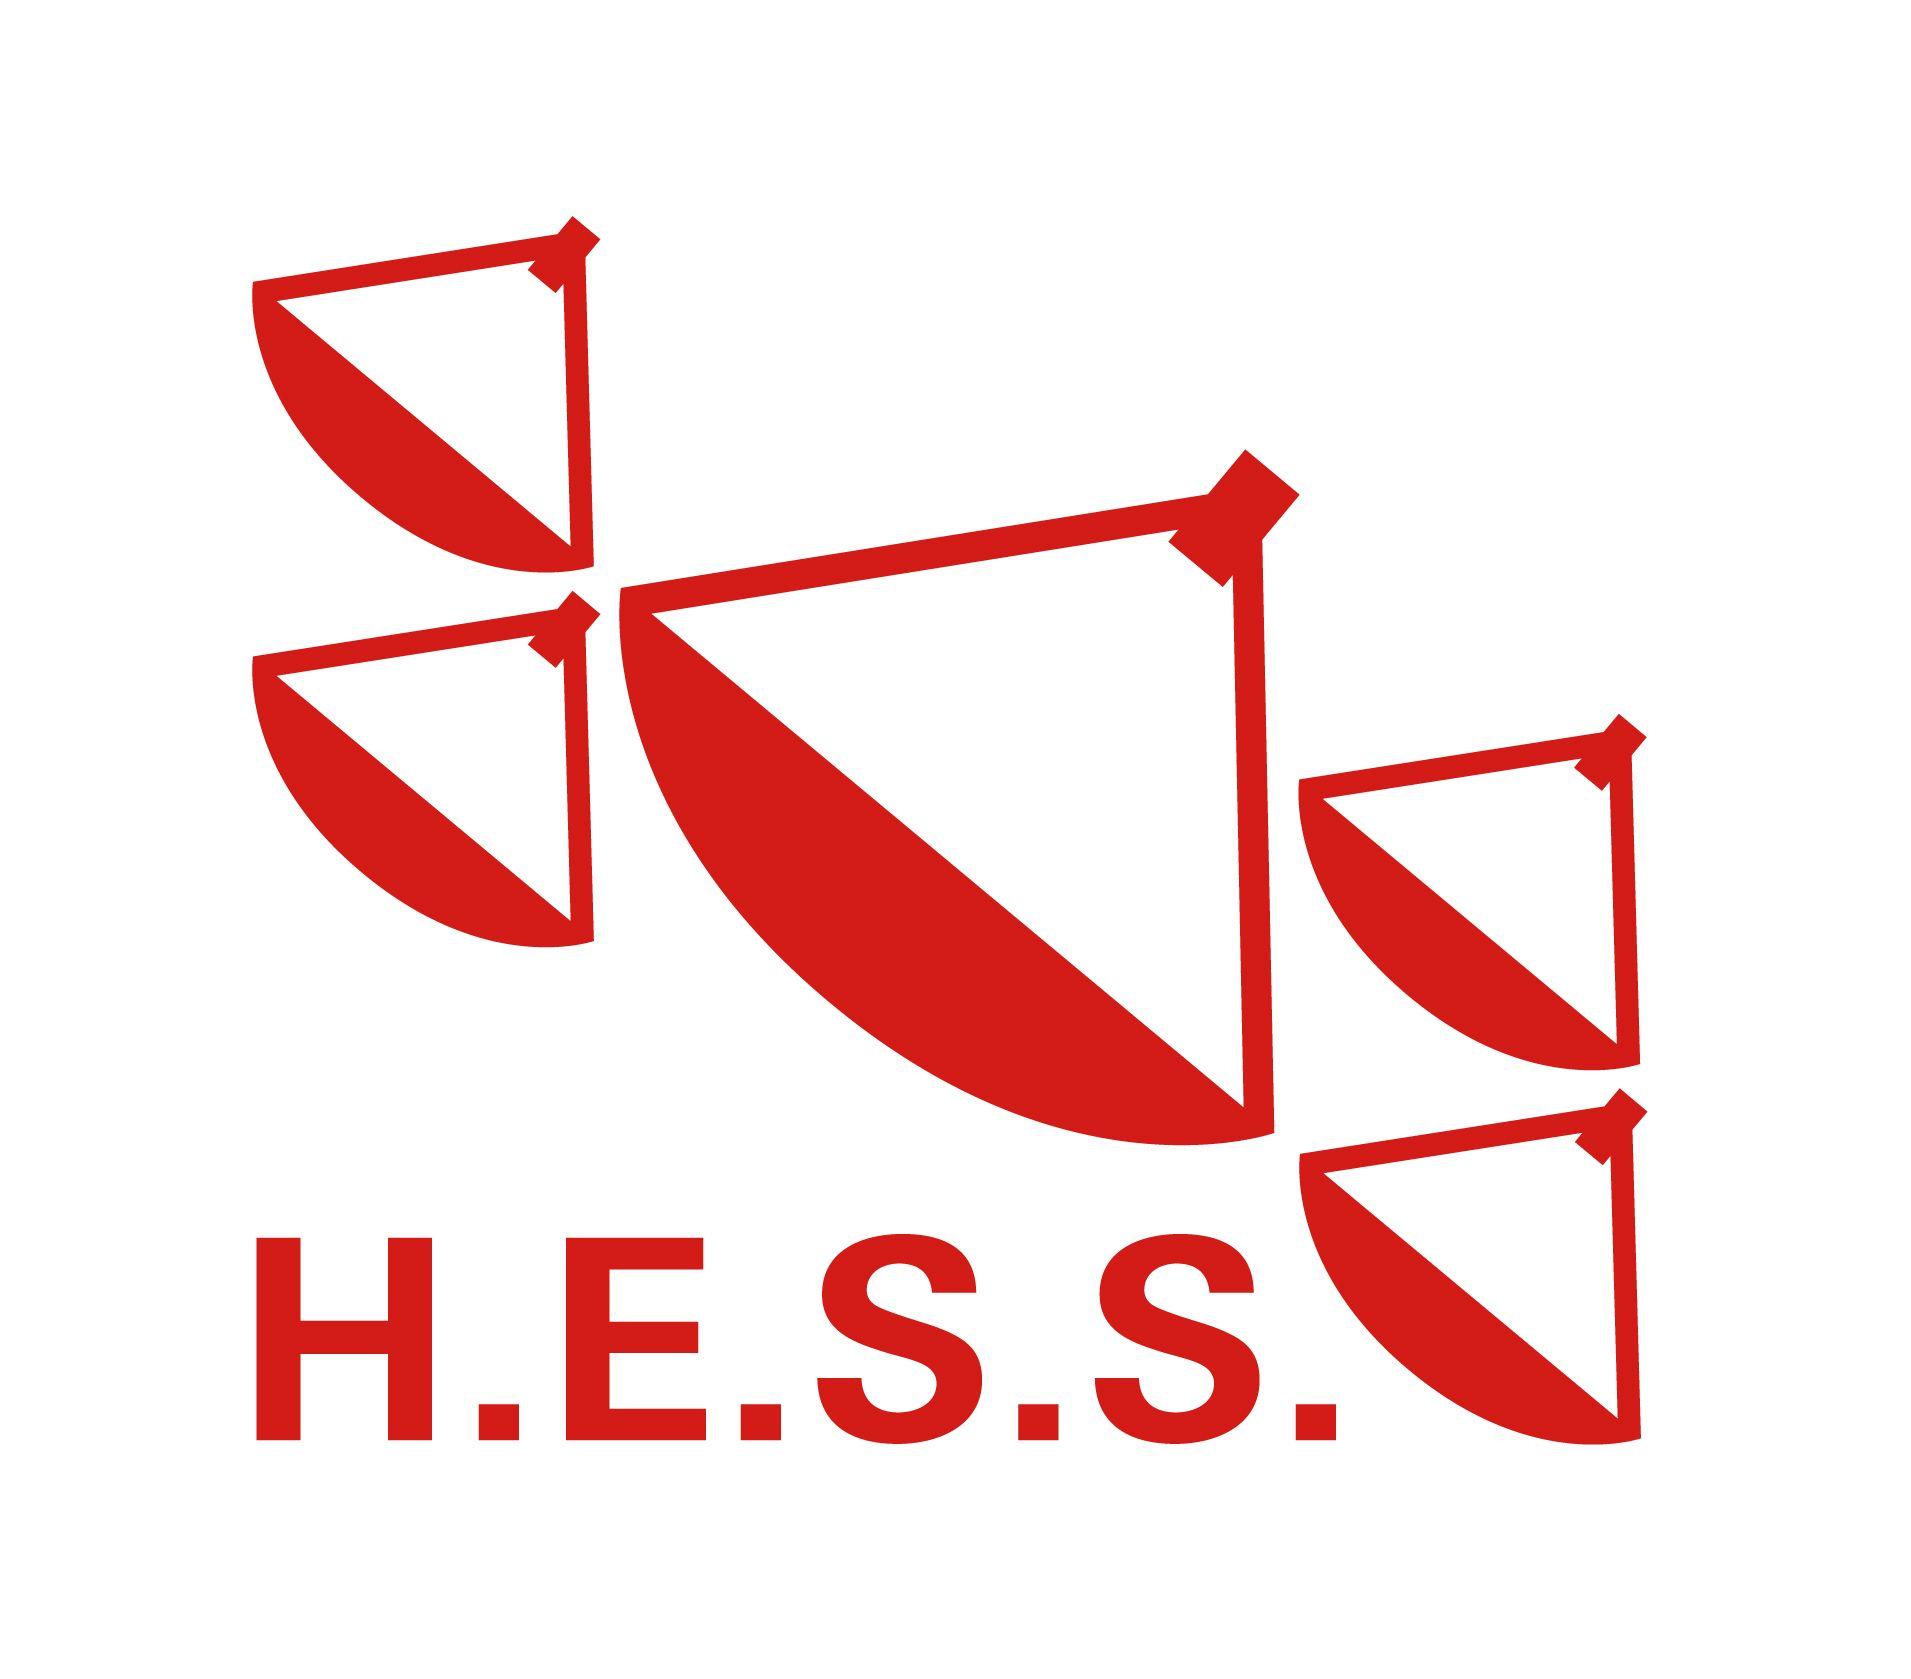 Hess Logo - H.E.S.S. High Energy Stereoscopic System